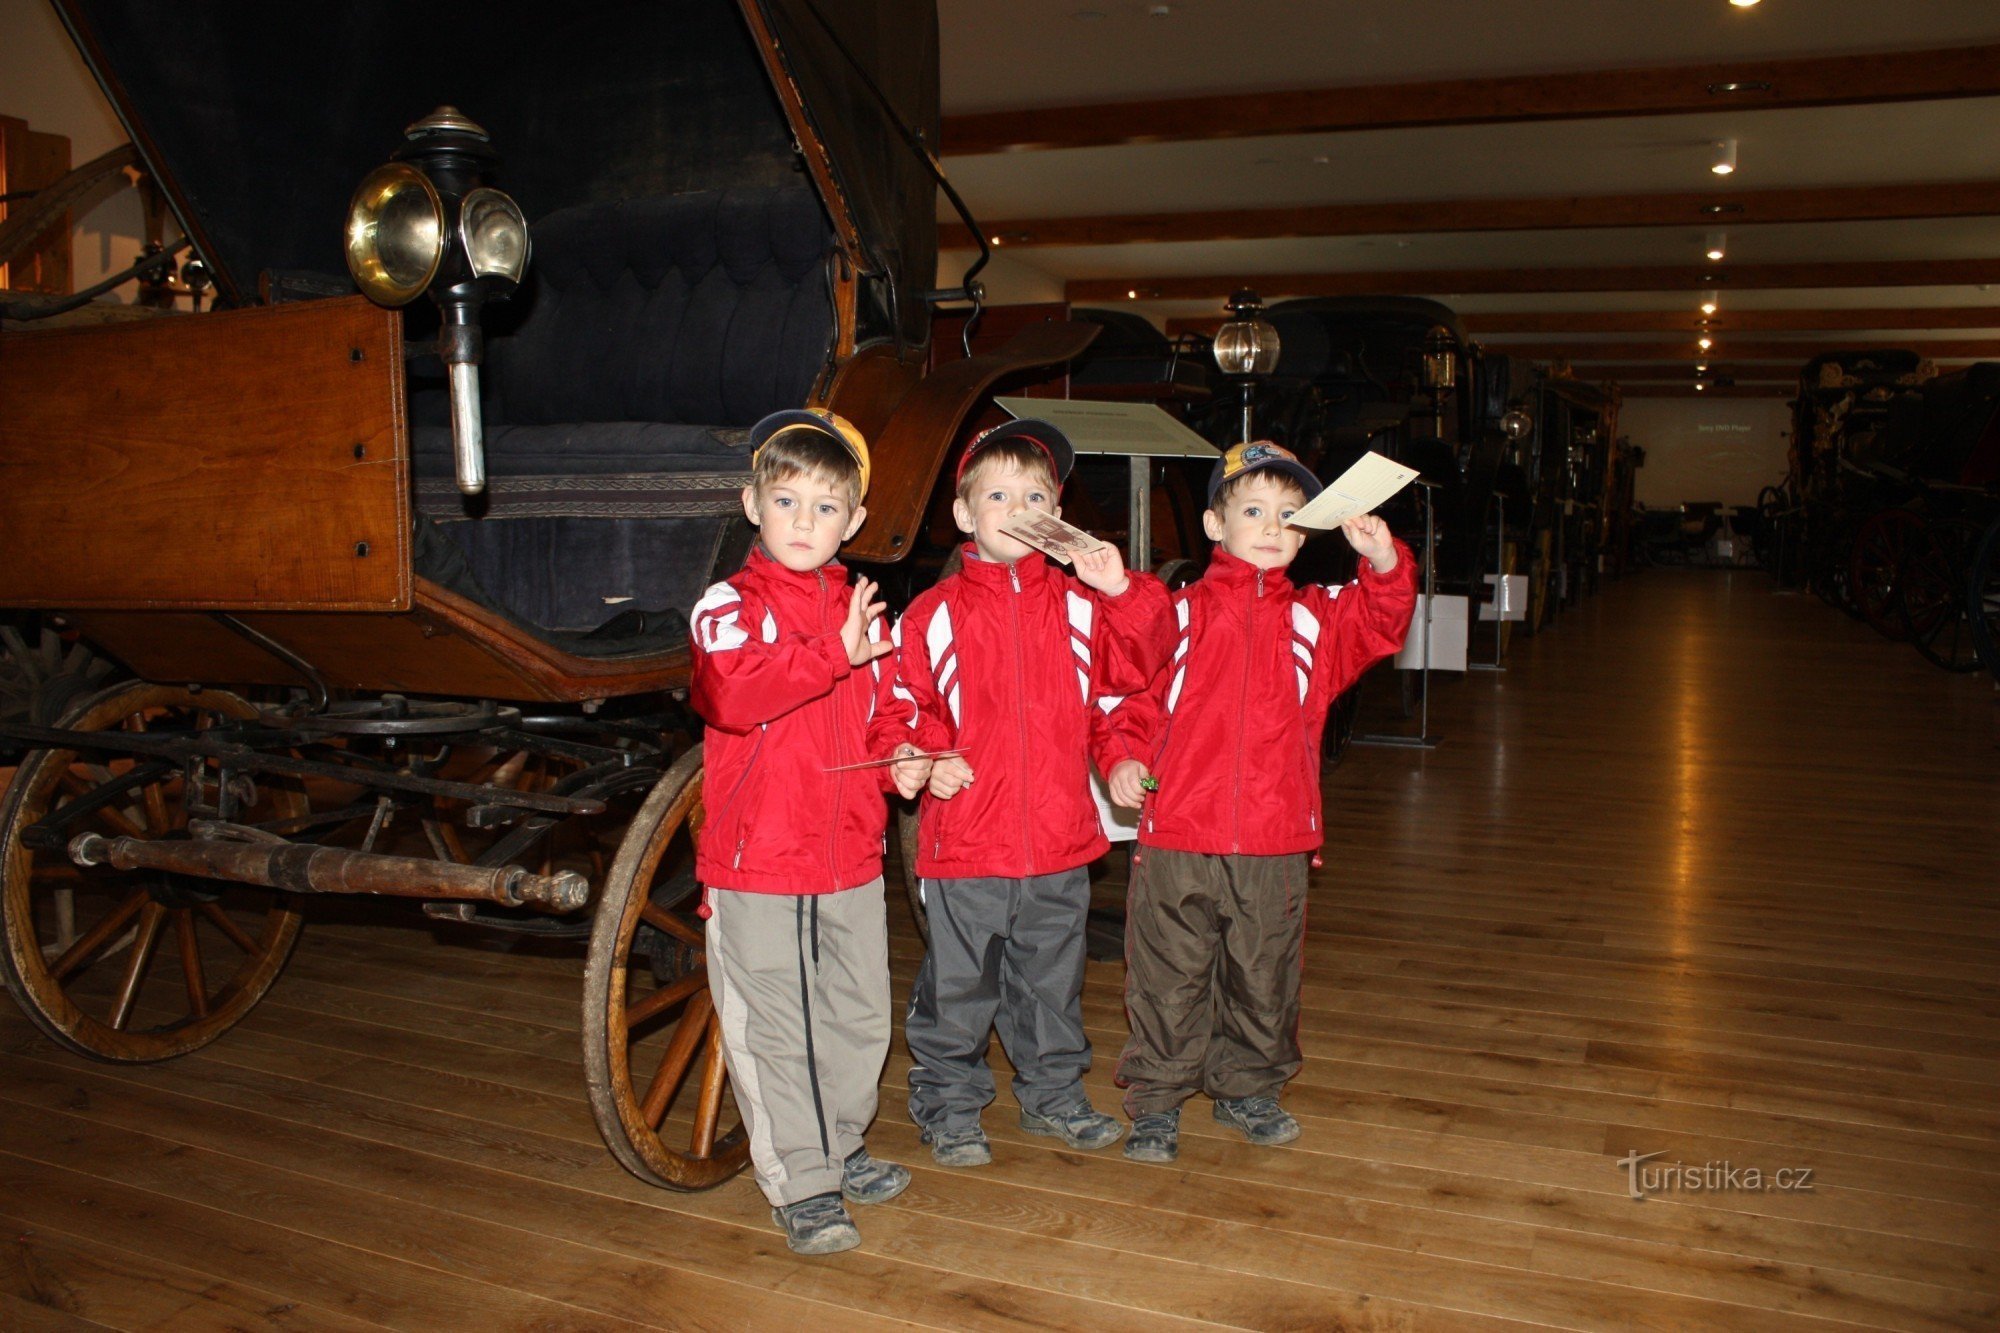 Trojke, dječaci Pája, Ráďa i Míša u muzeju kočija